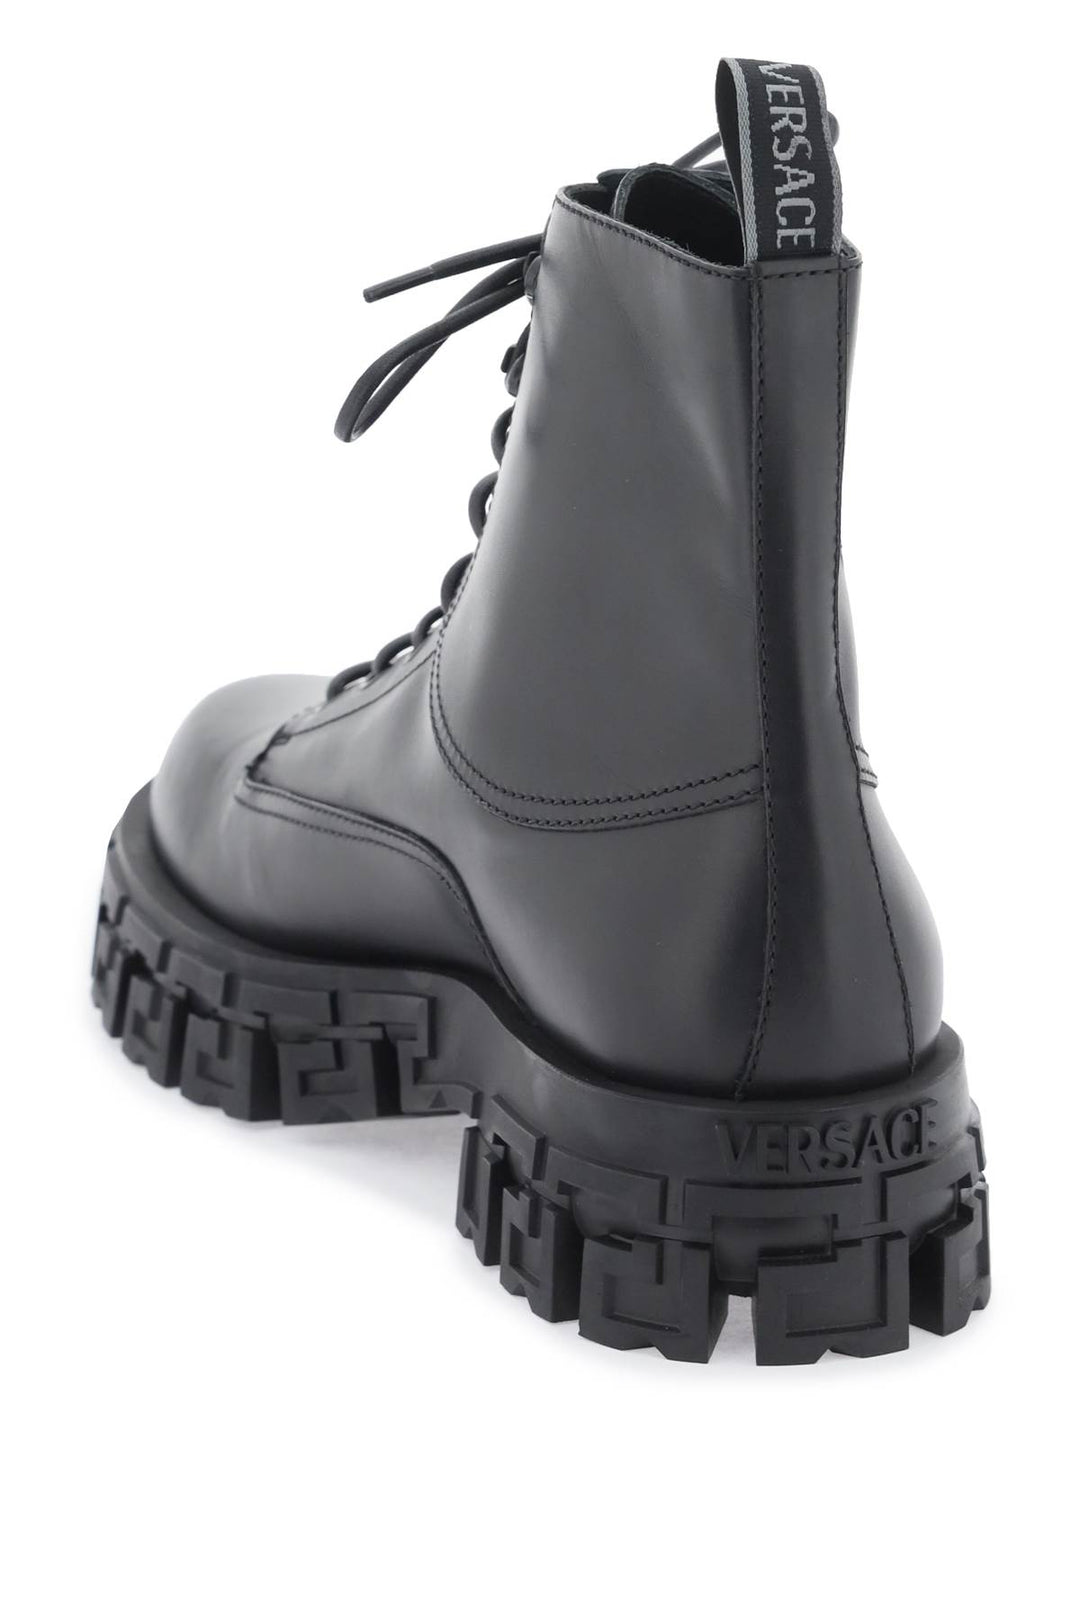 Versace Greca Portico Combat Boots   Nero